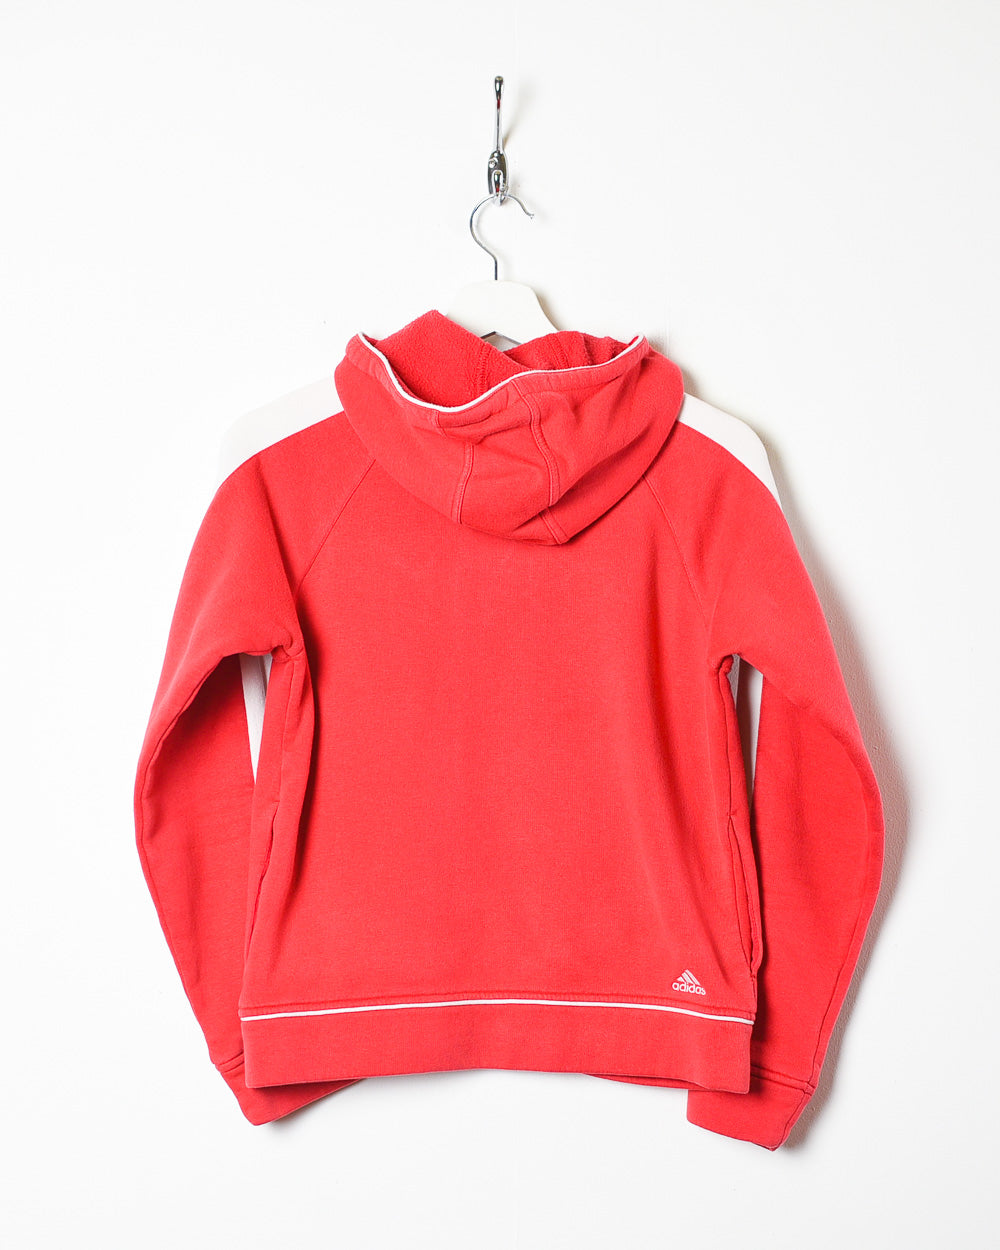 Red Adidas Zip-Through Hoodie - Small Women's